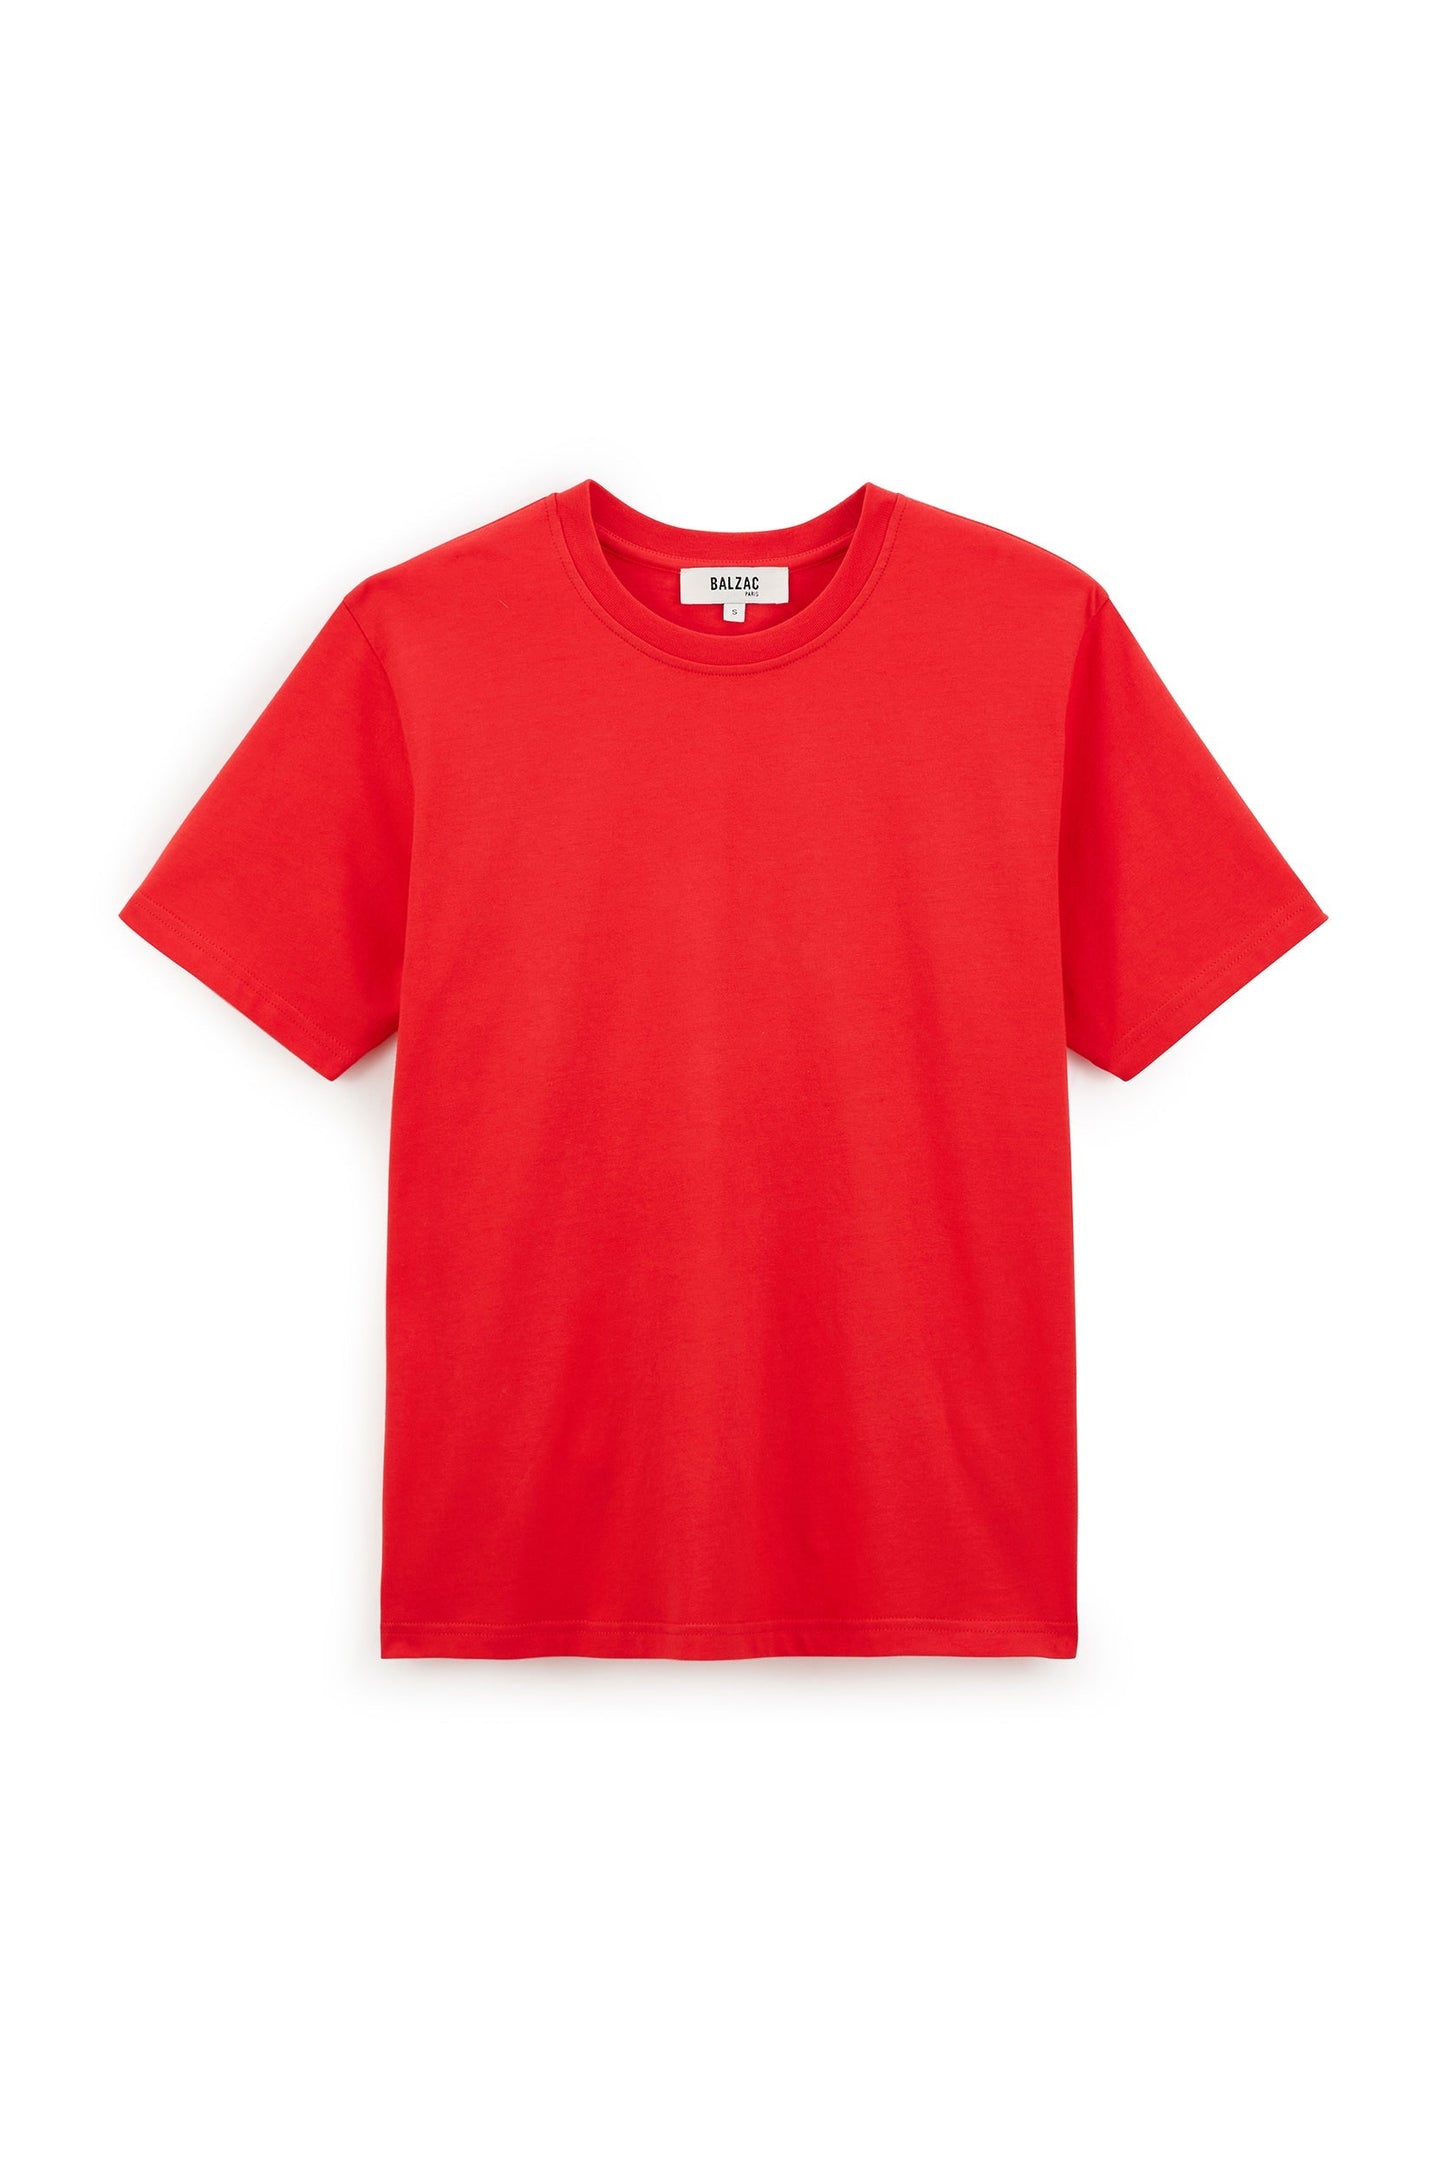 Tee-shirt Bree rouge